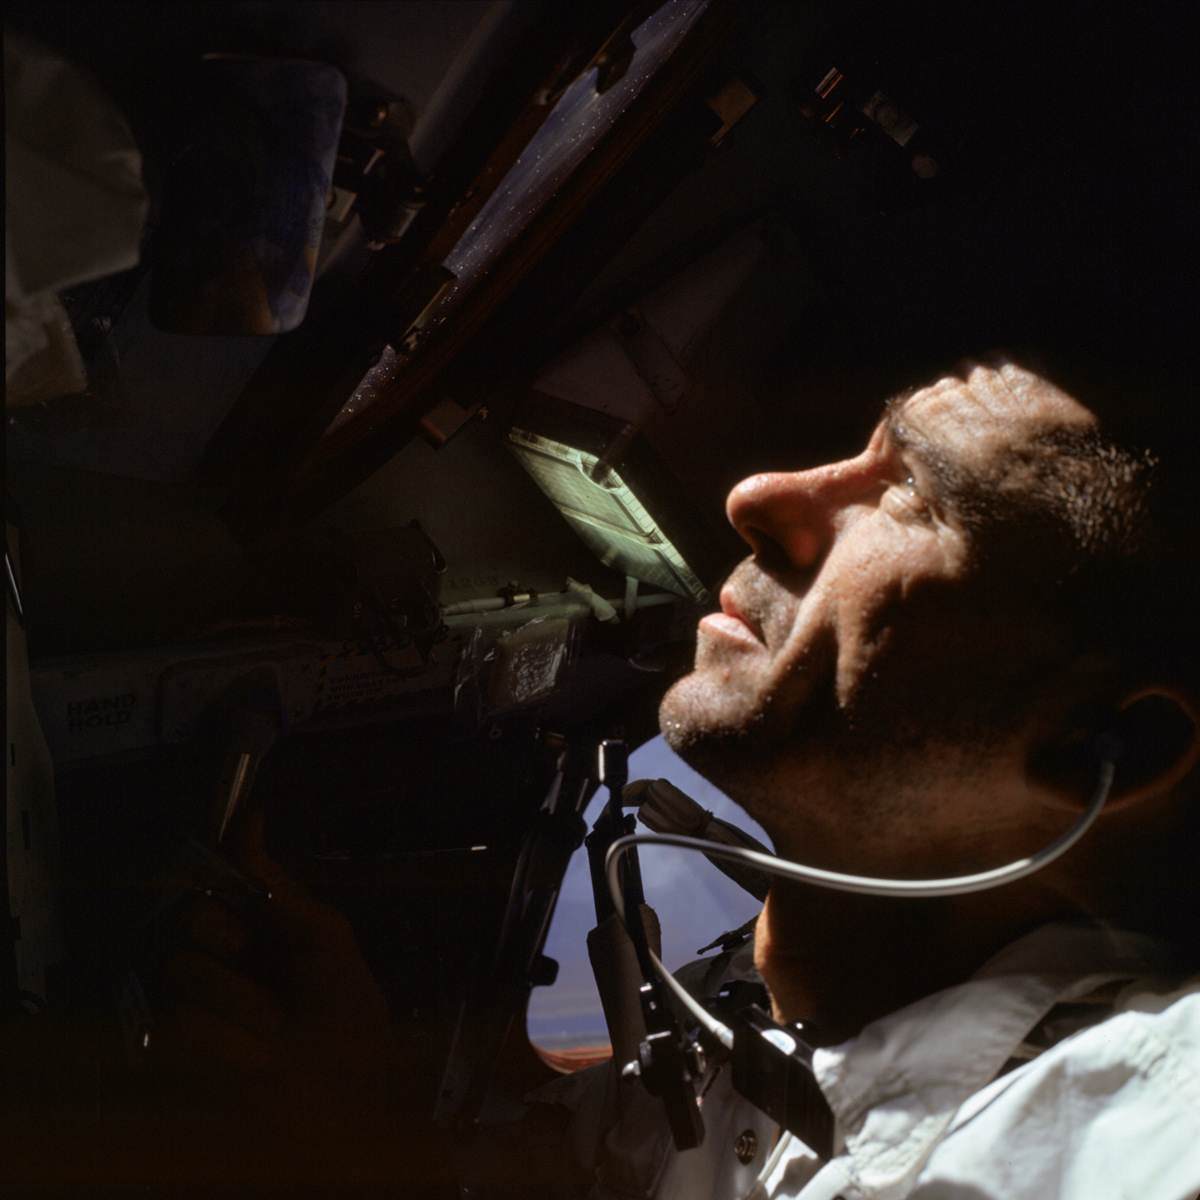 Man inside spacecraft, looking up